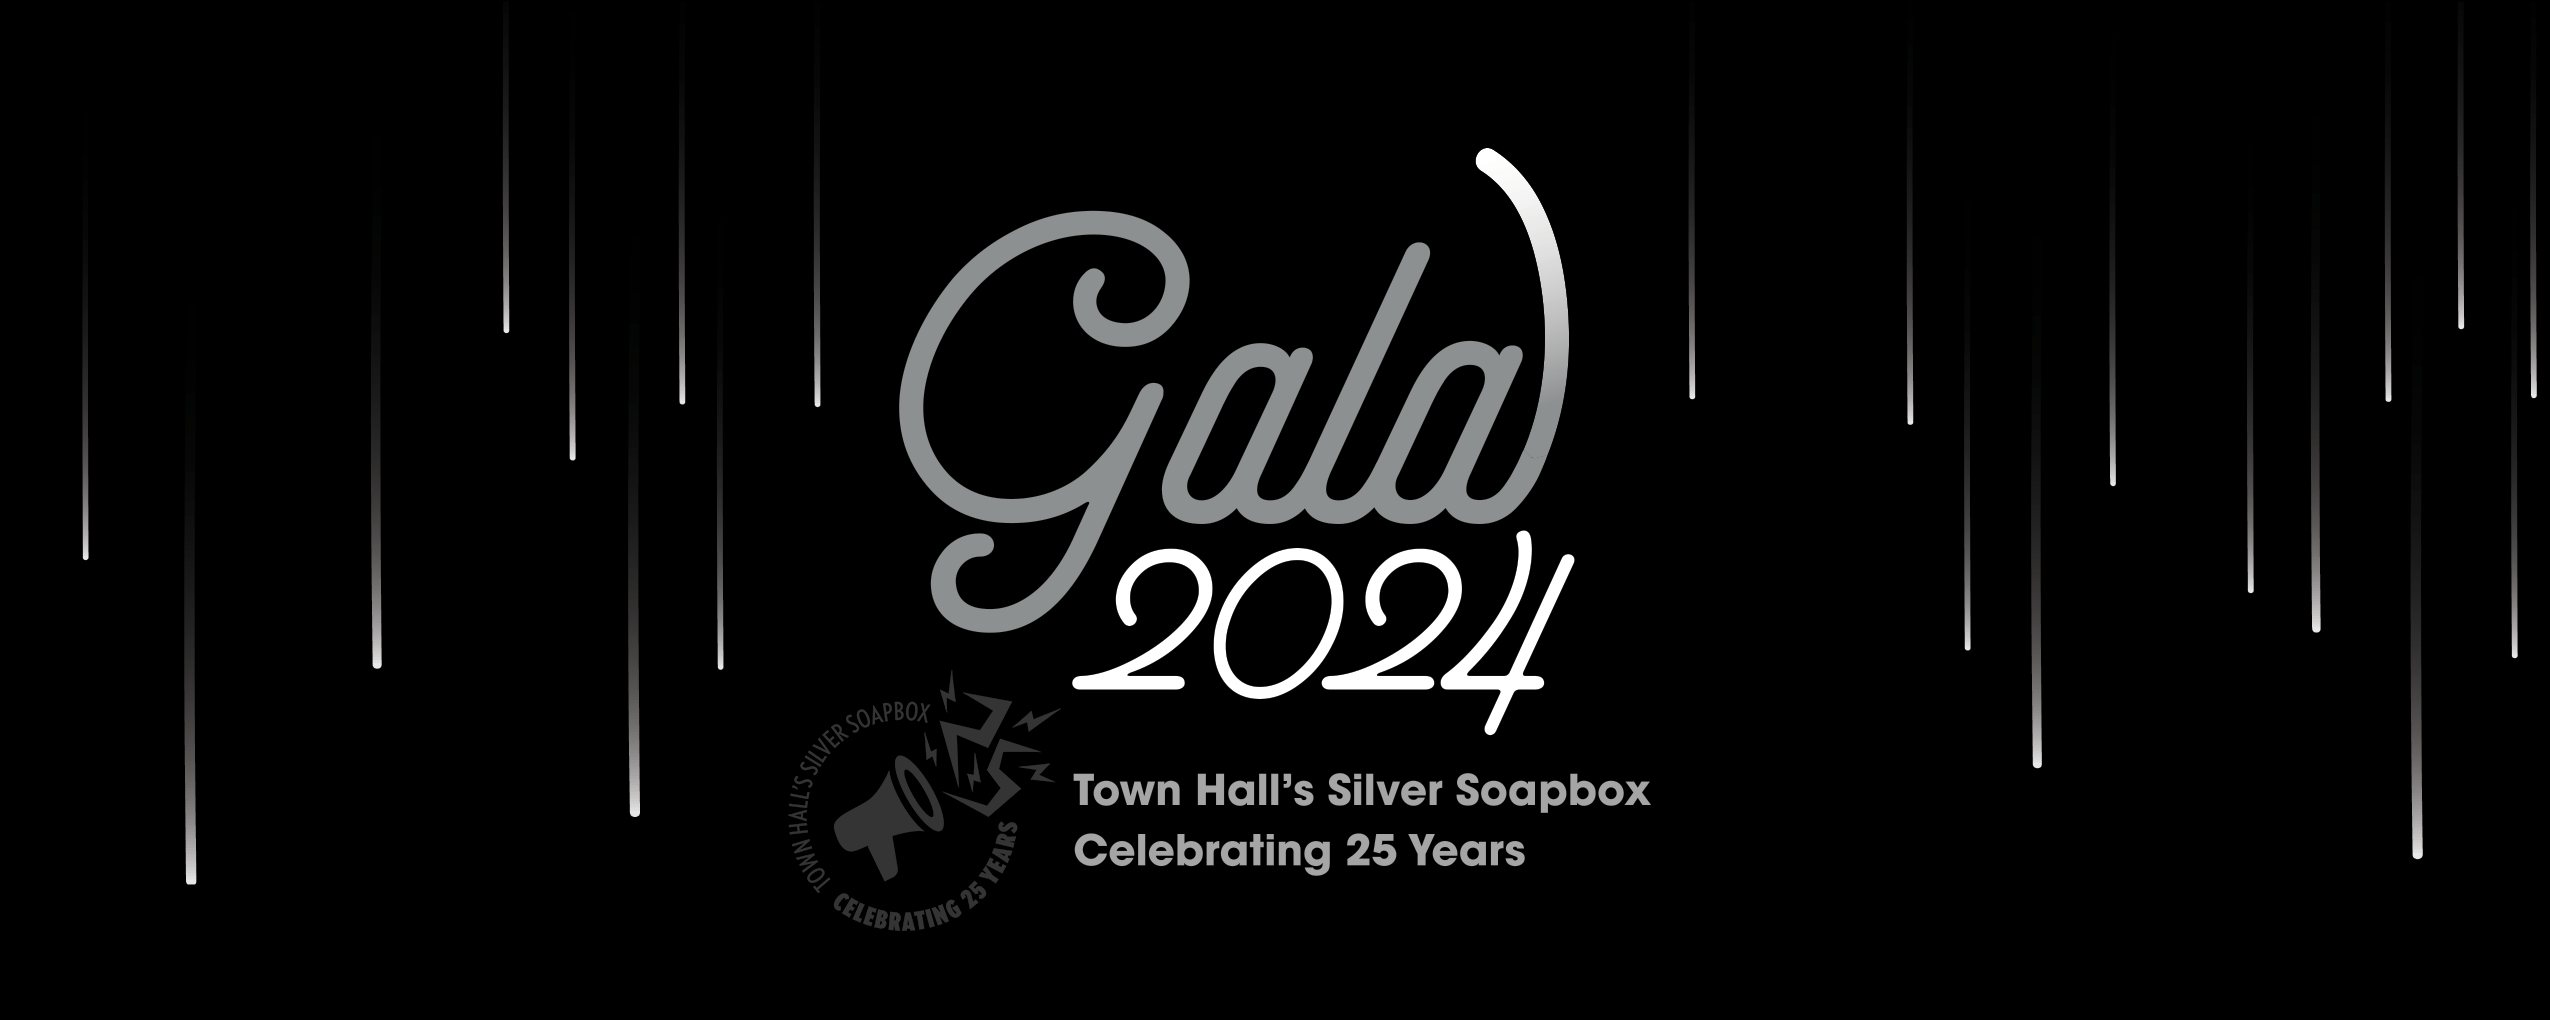 Gala 2024 black and silver logo with falling silver rain